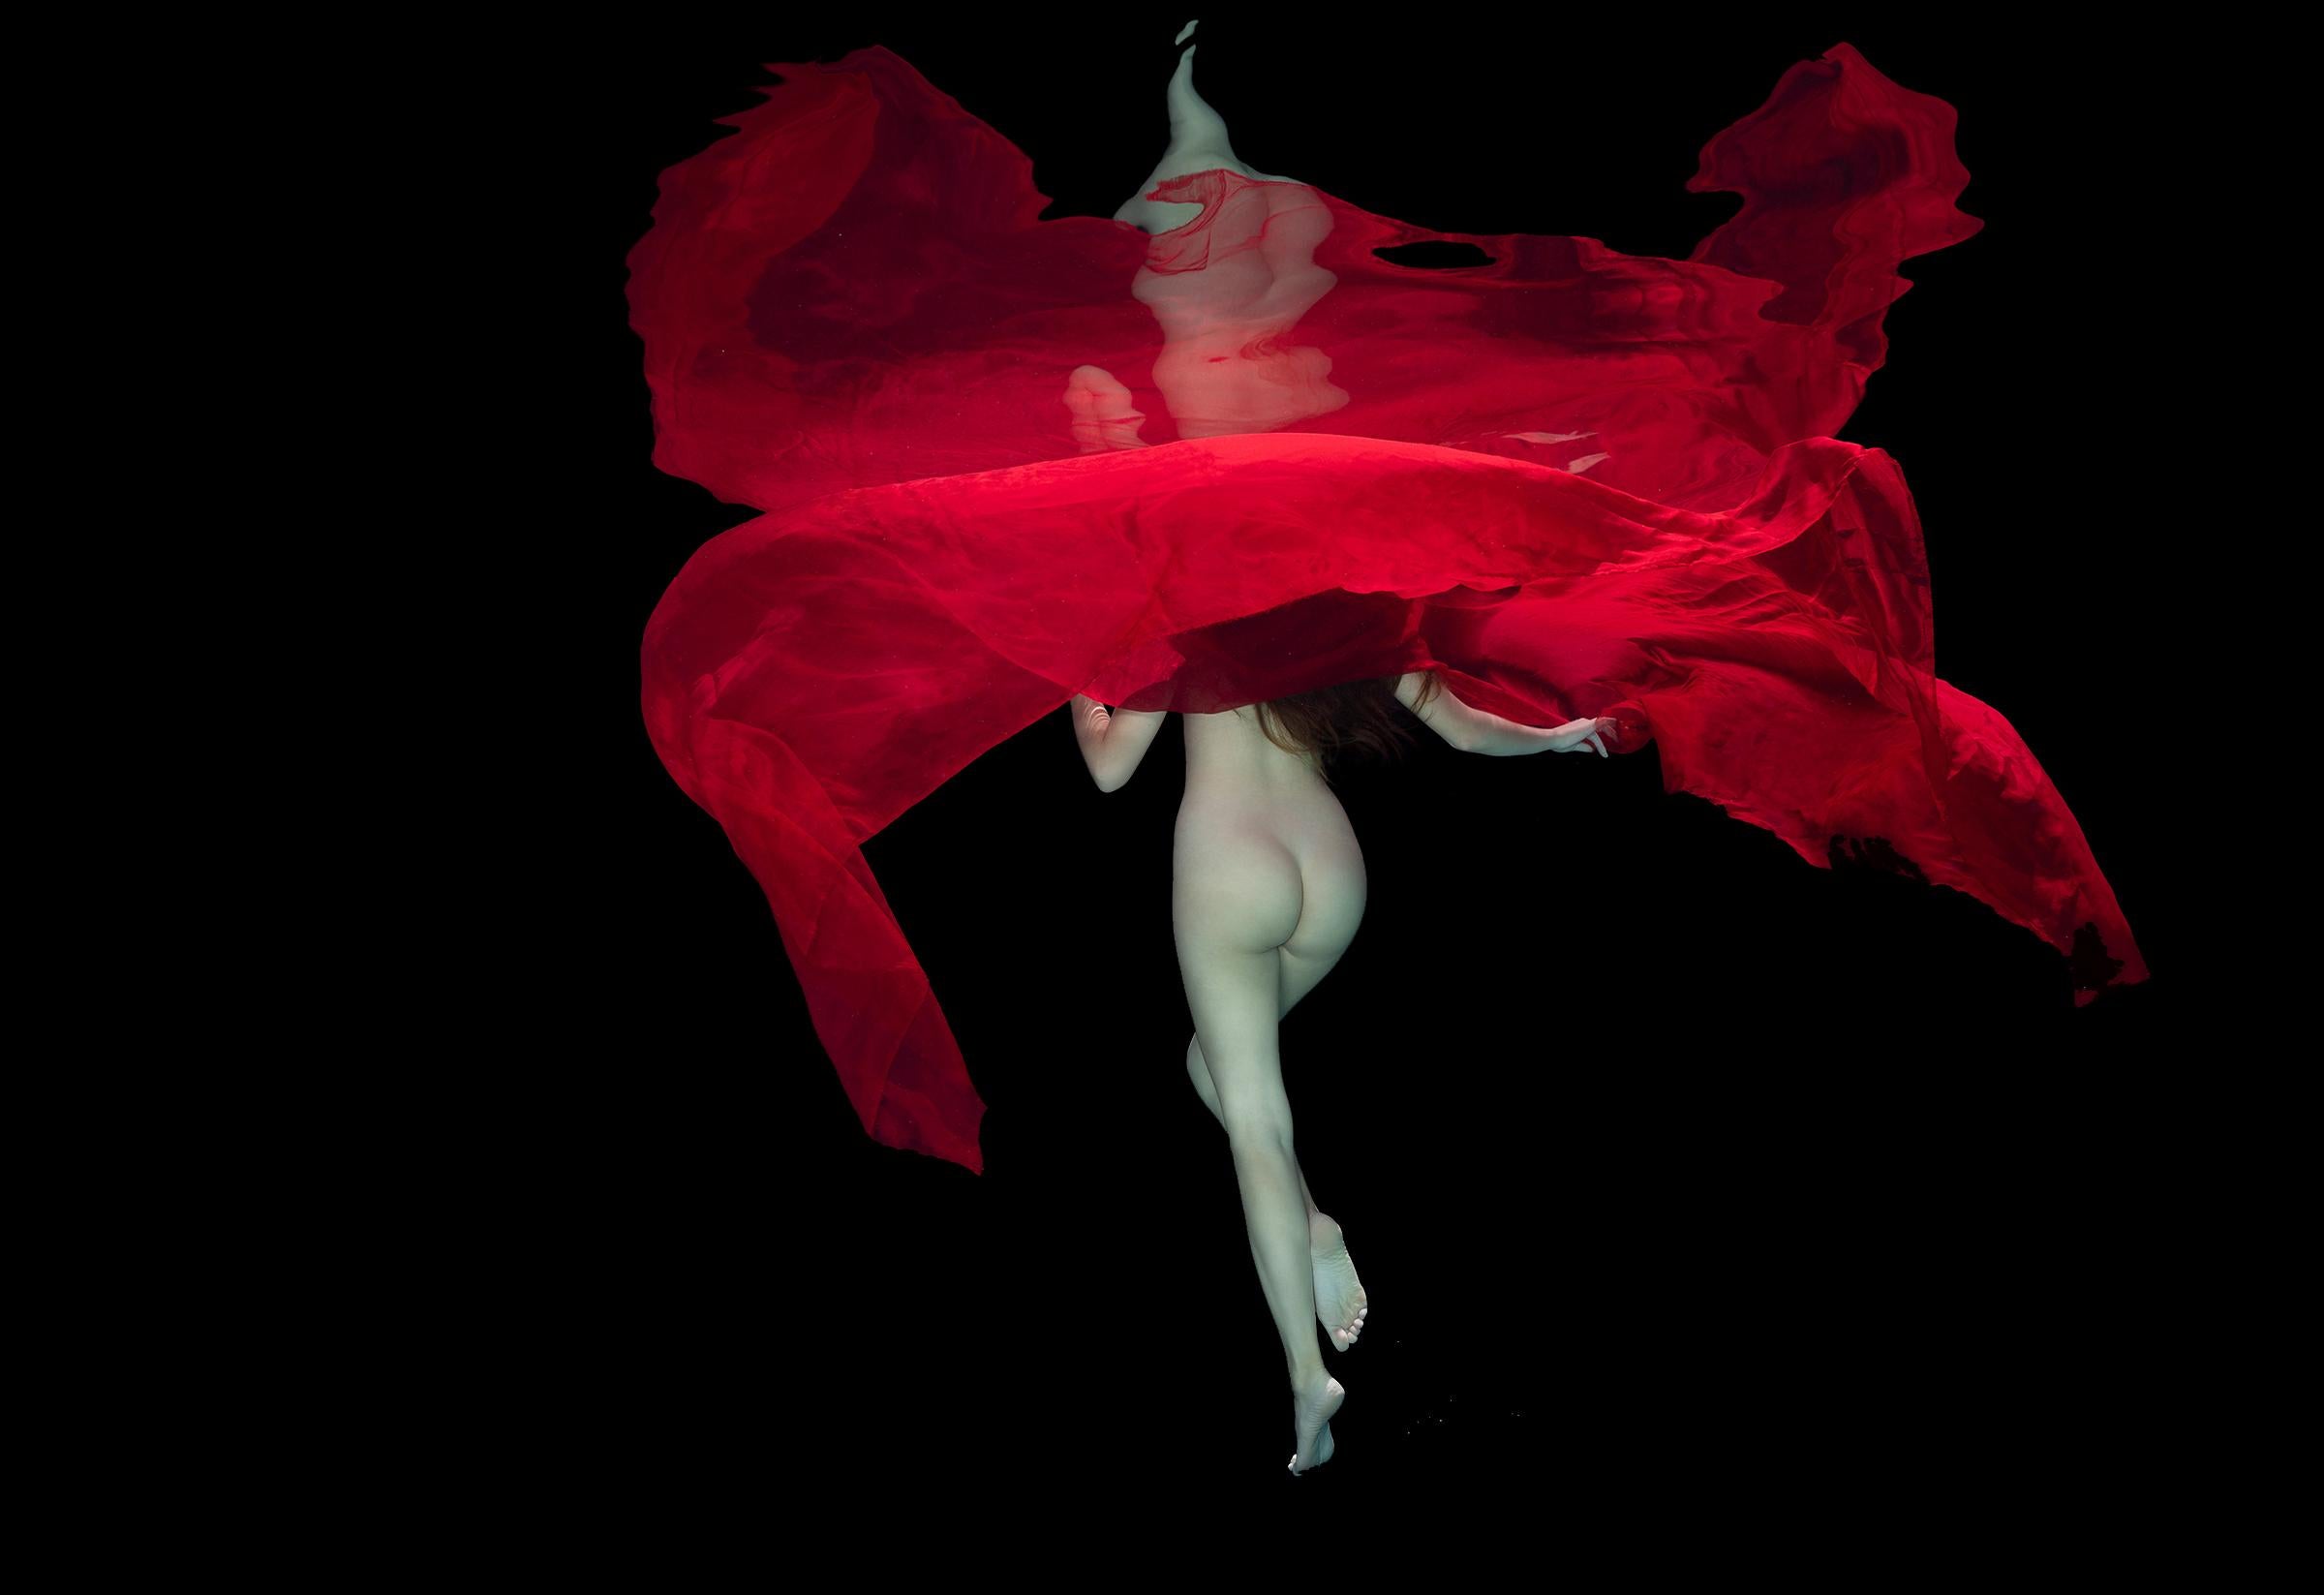 Hibiscus - underwater nude photograph - archival pigment print 24" x 36"